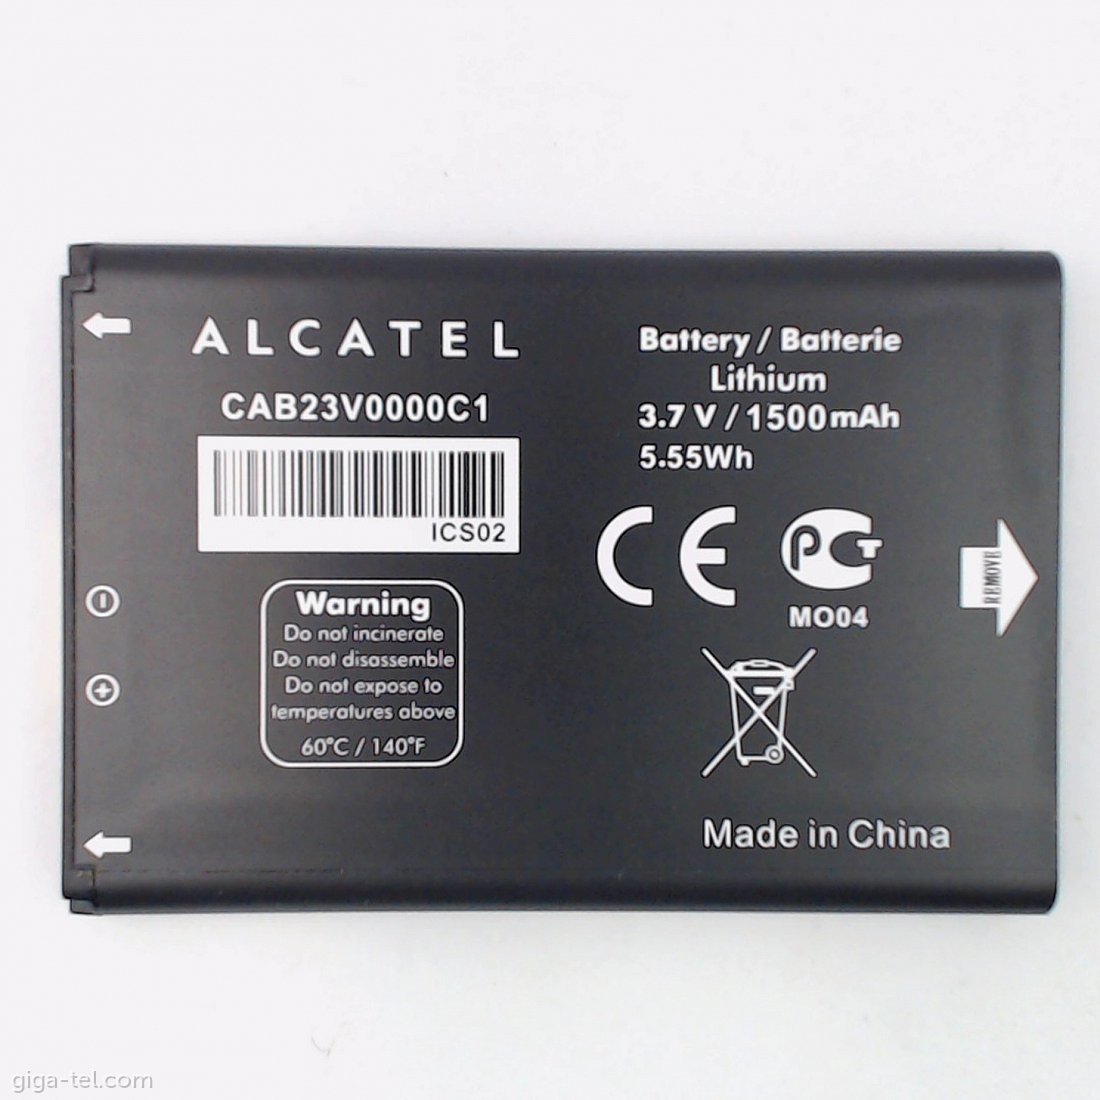 Alcatel CAB23V0000C1 battery